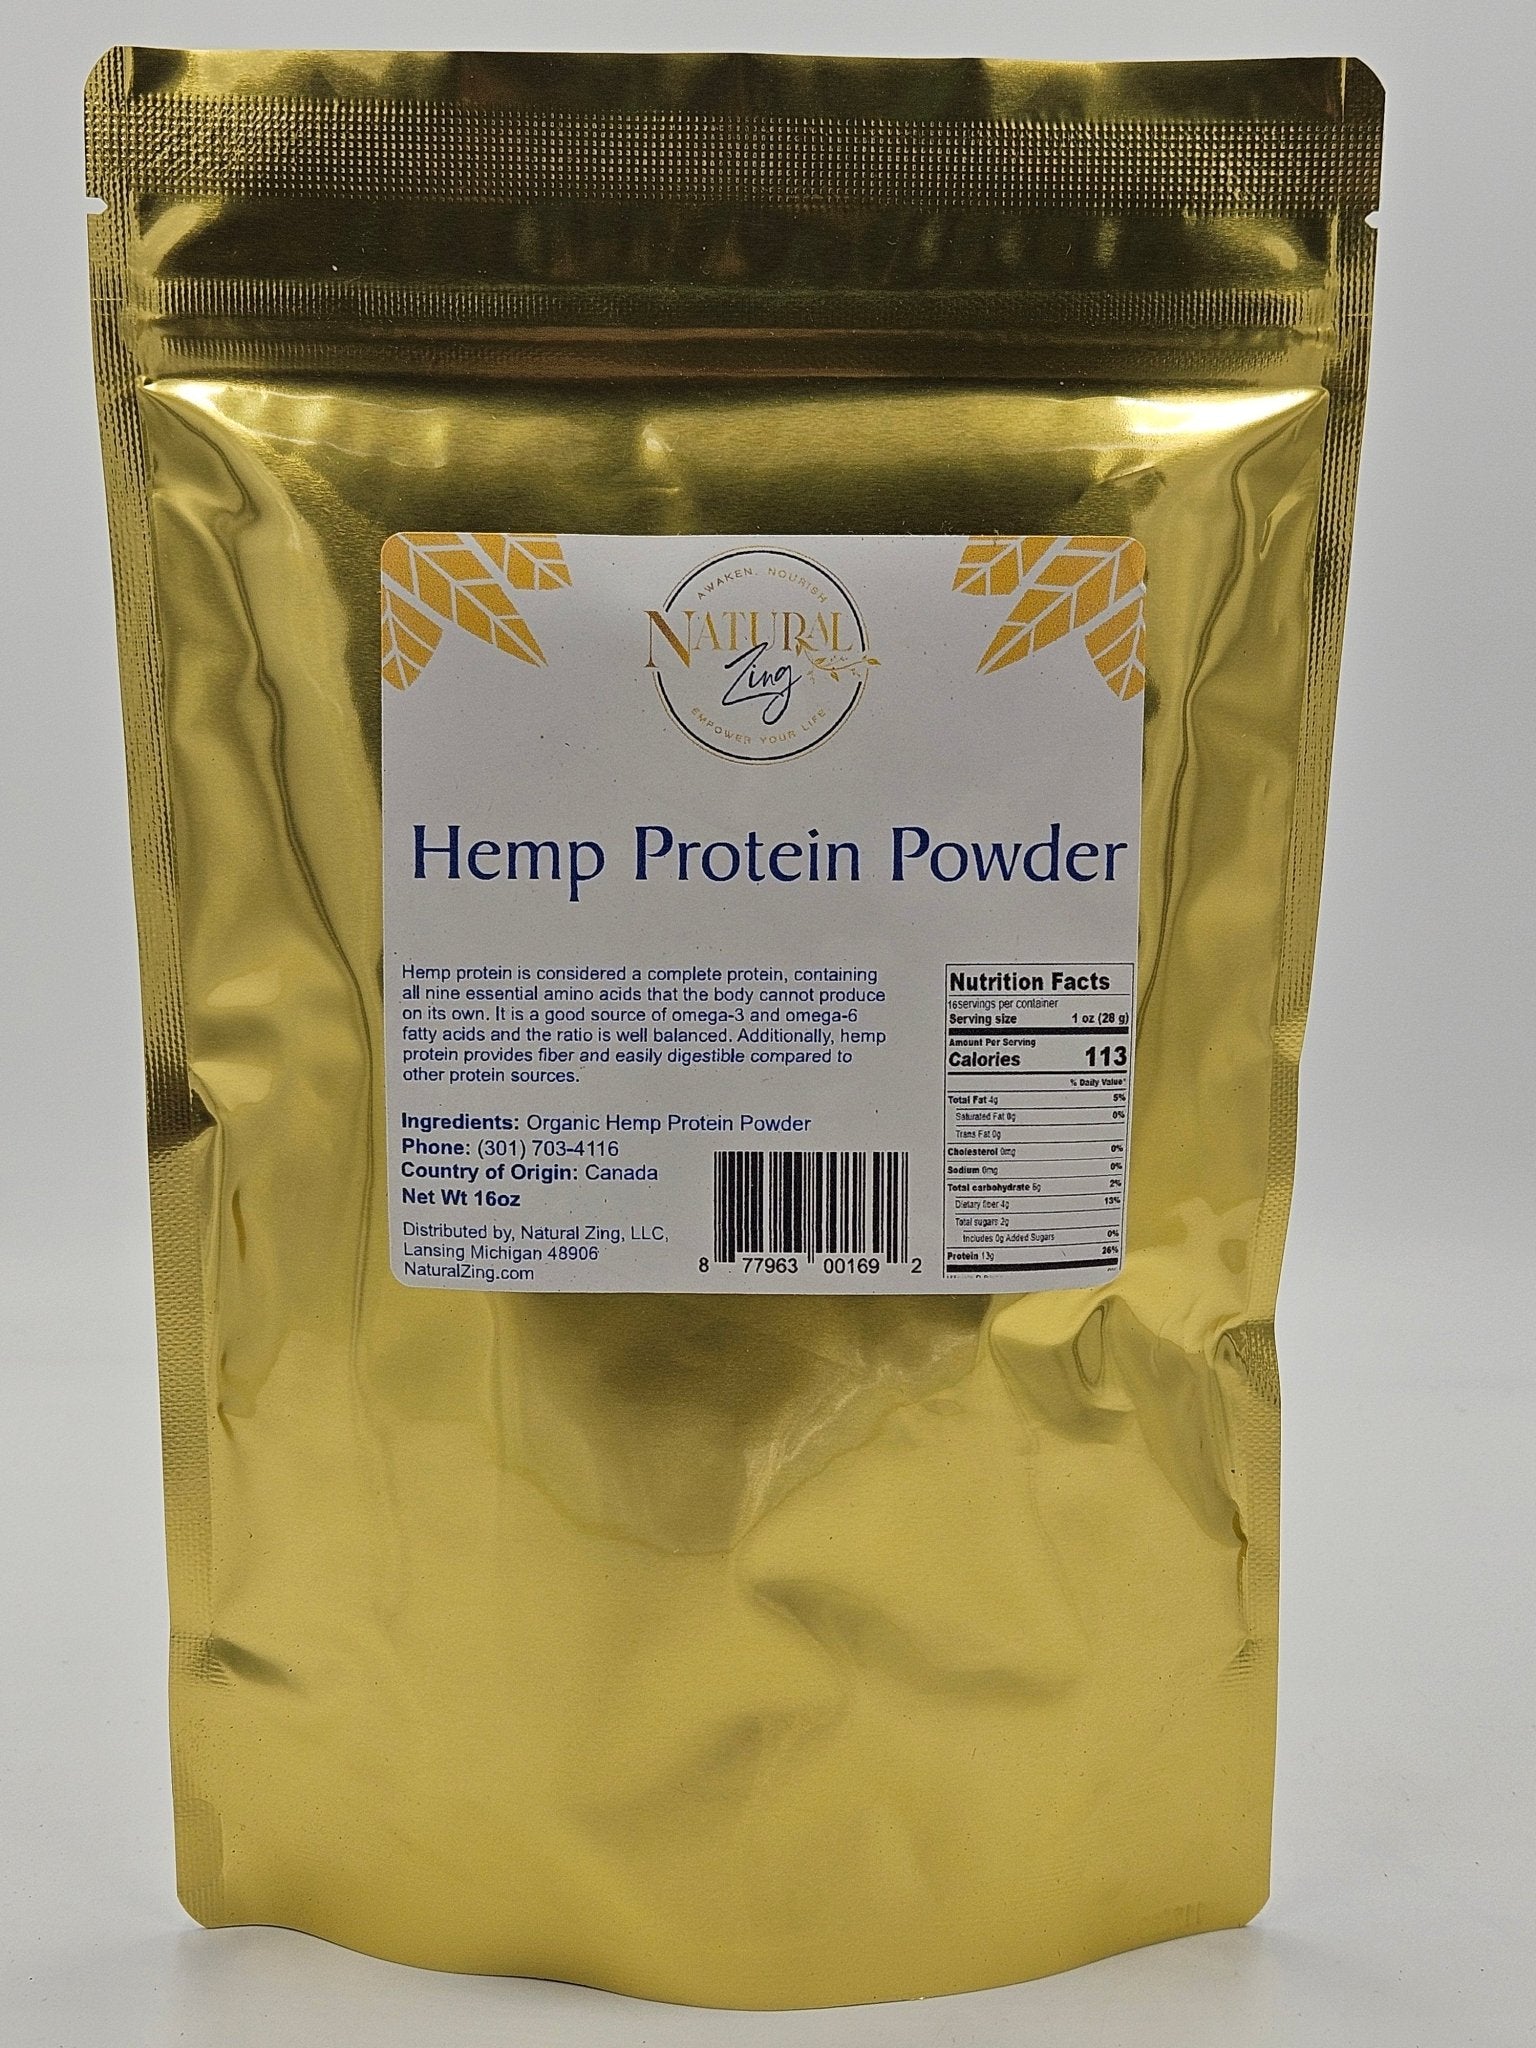 Hemp Protein Powder 16 oz